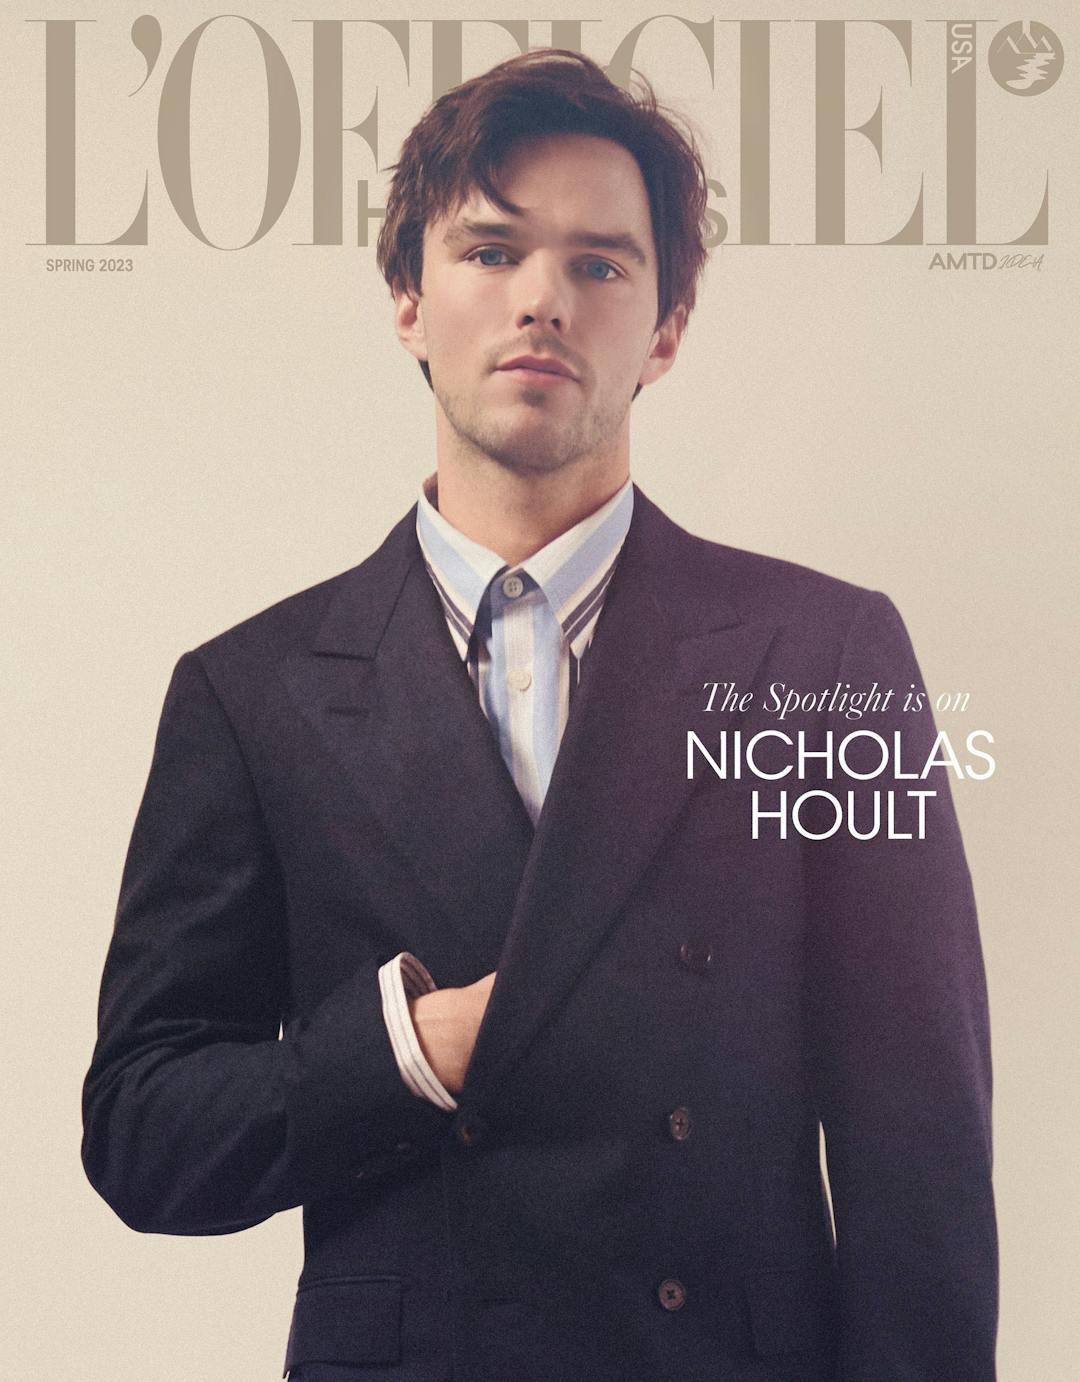 L'OFFICIEL USA Spring 2023 - Nicholas Hoult Cover